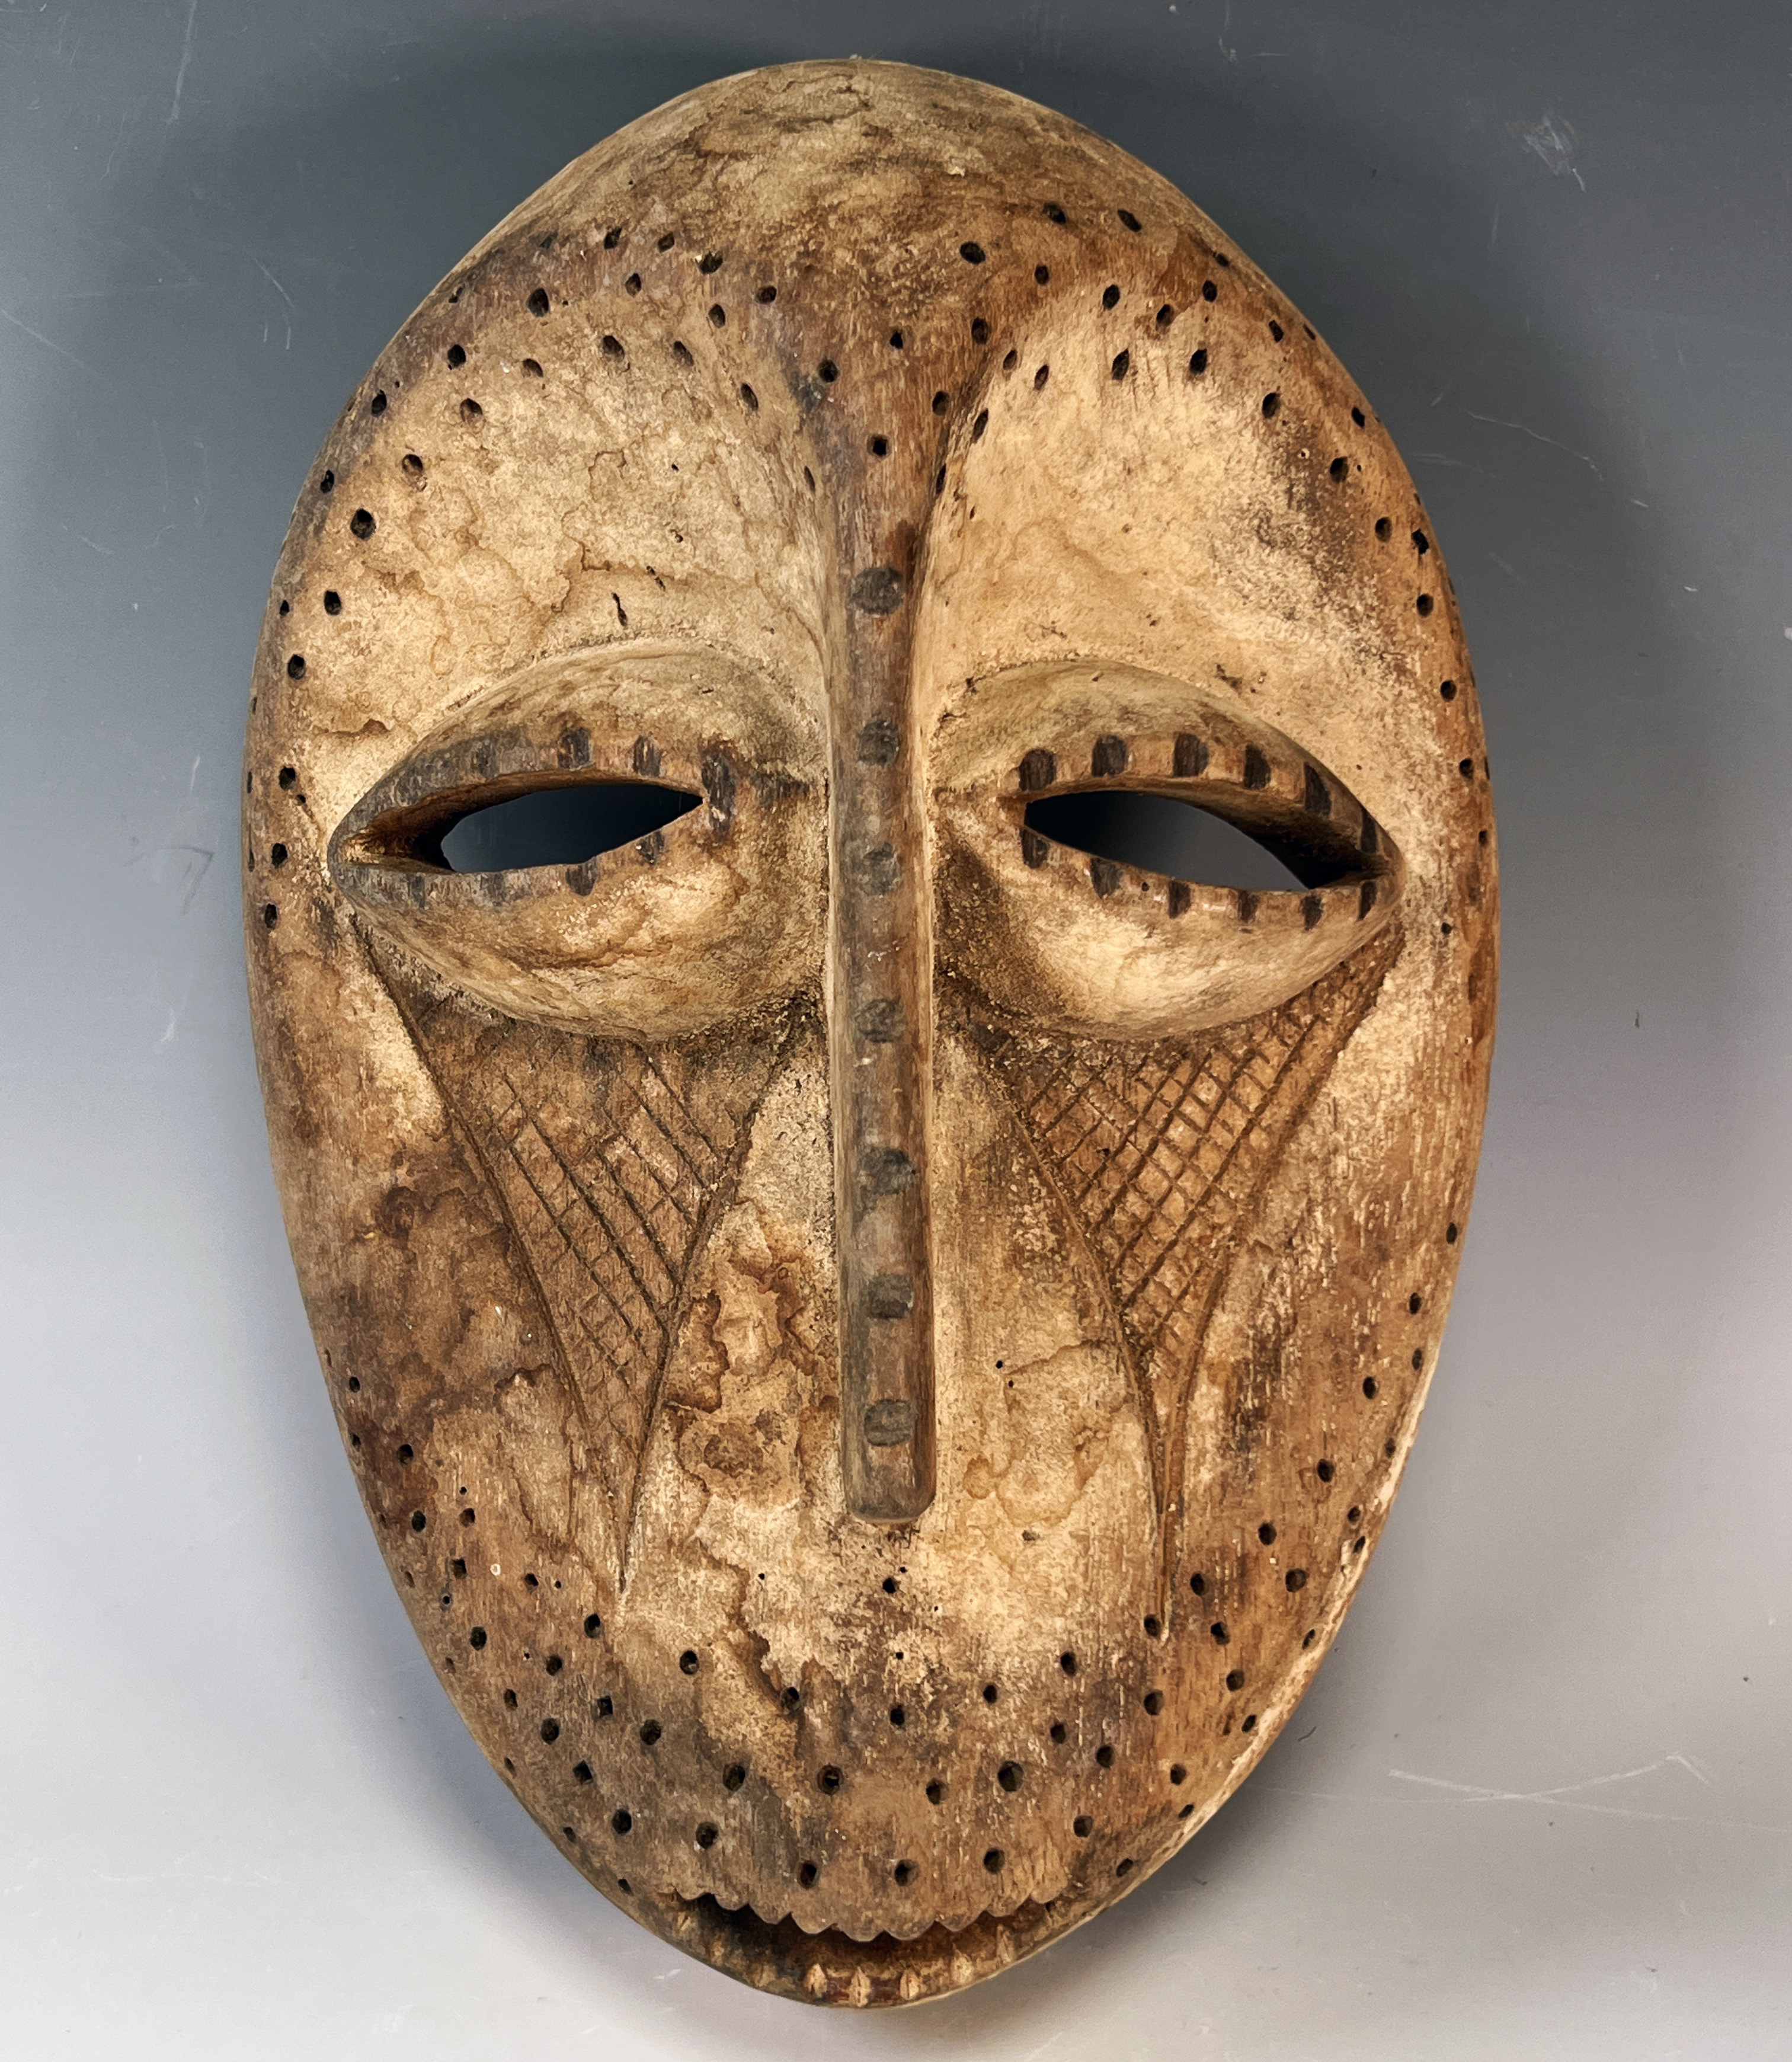 Lega Mask Congo Central Africa image 1